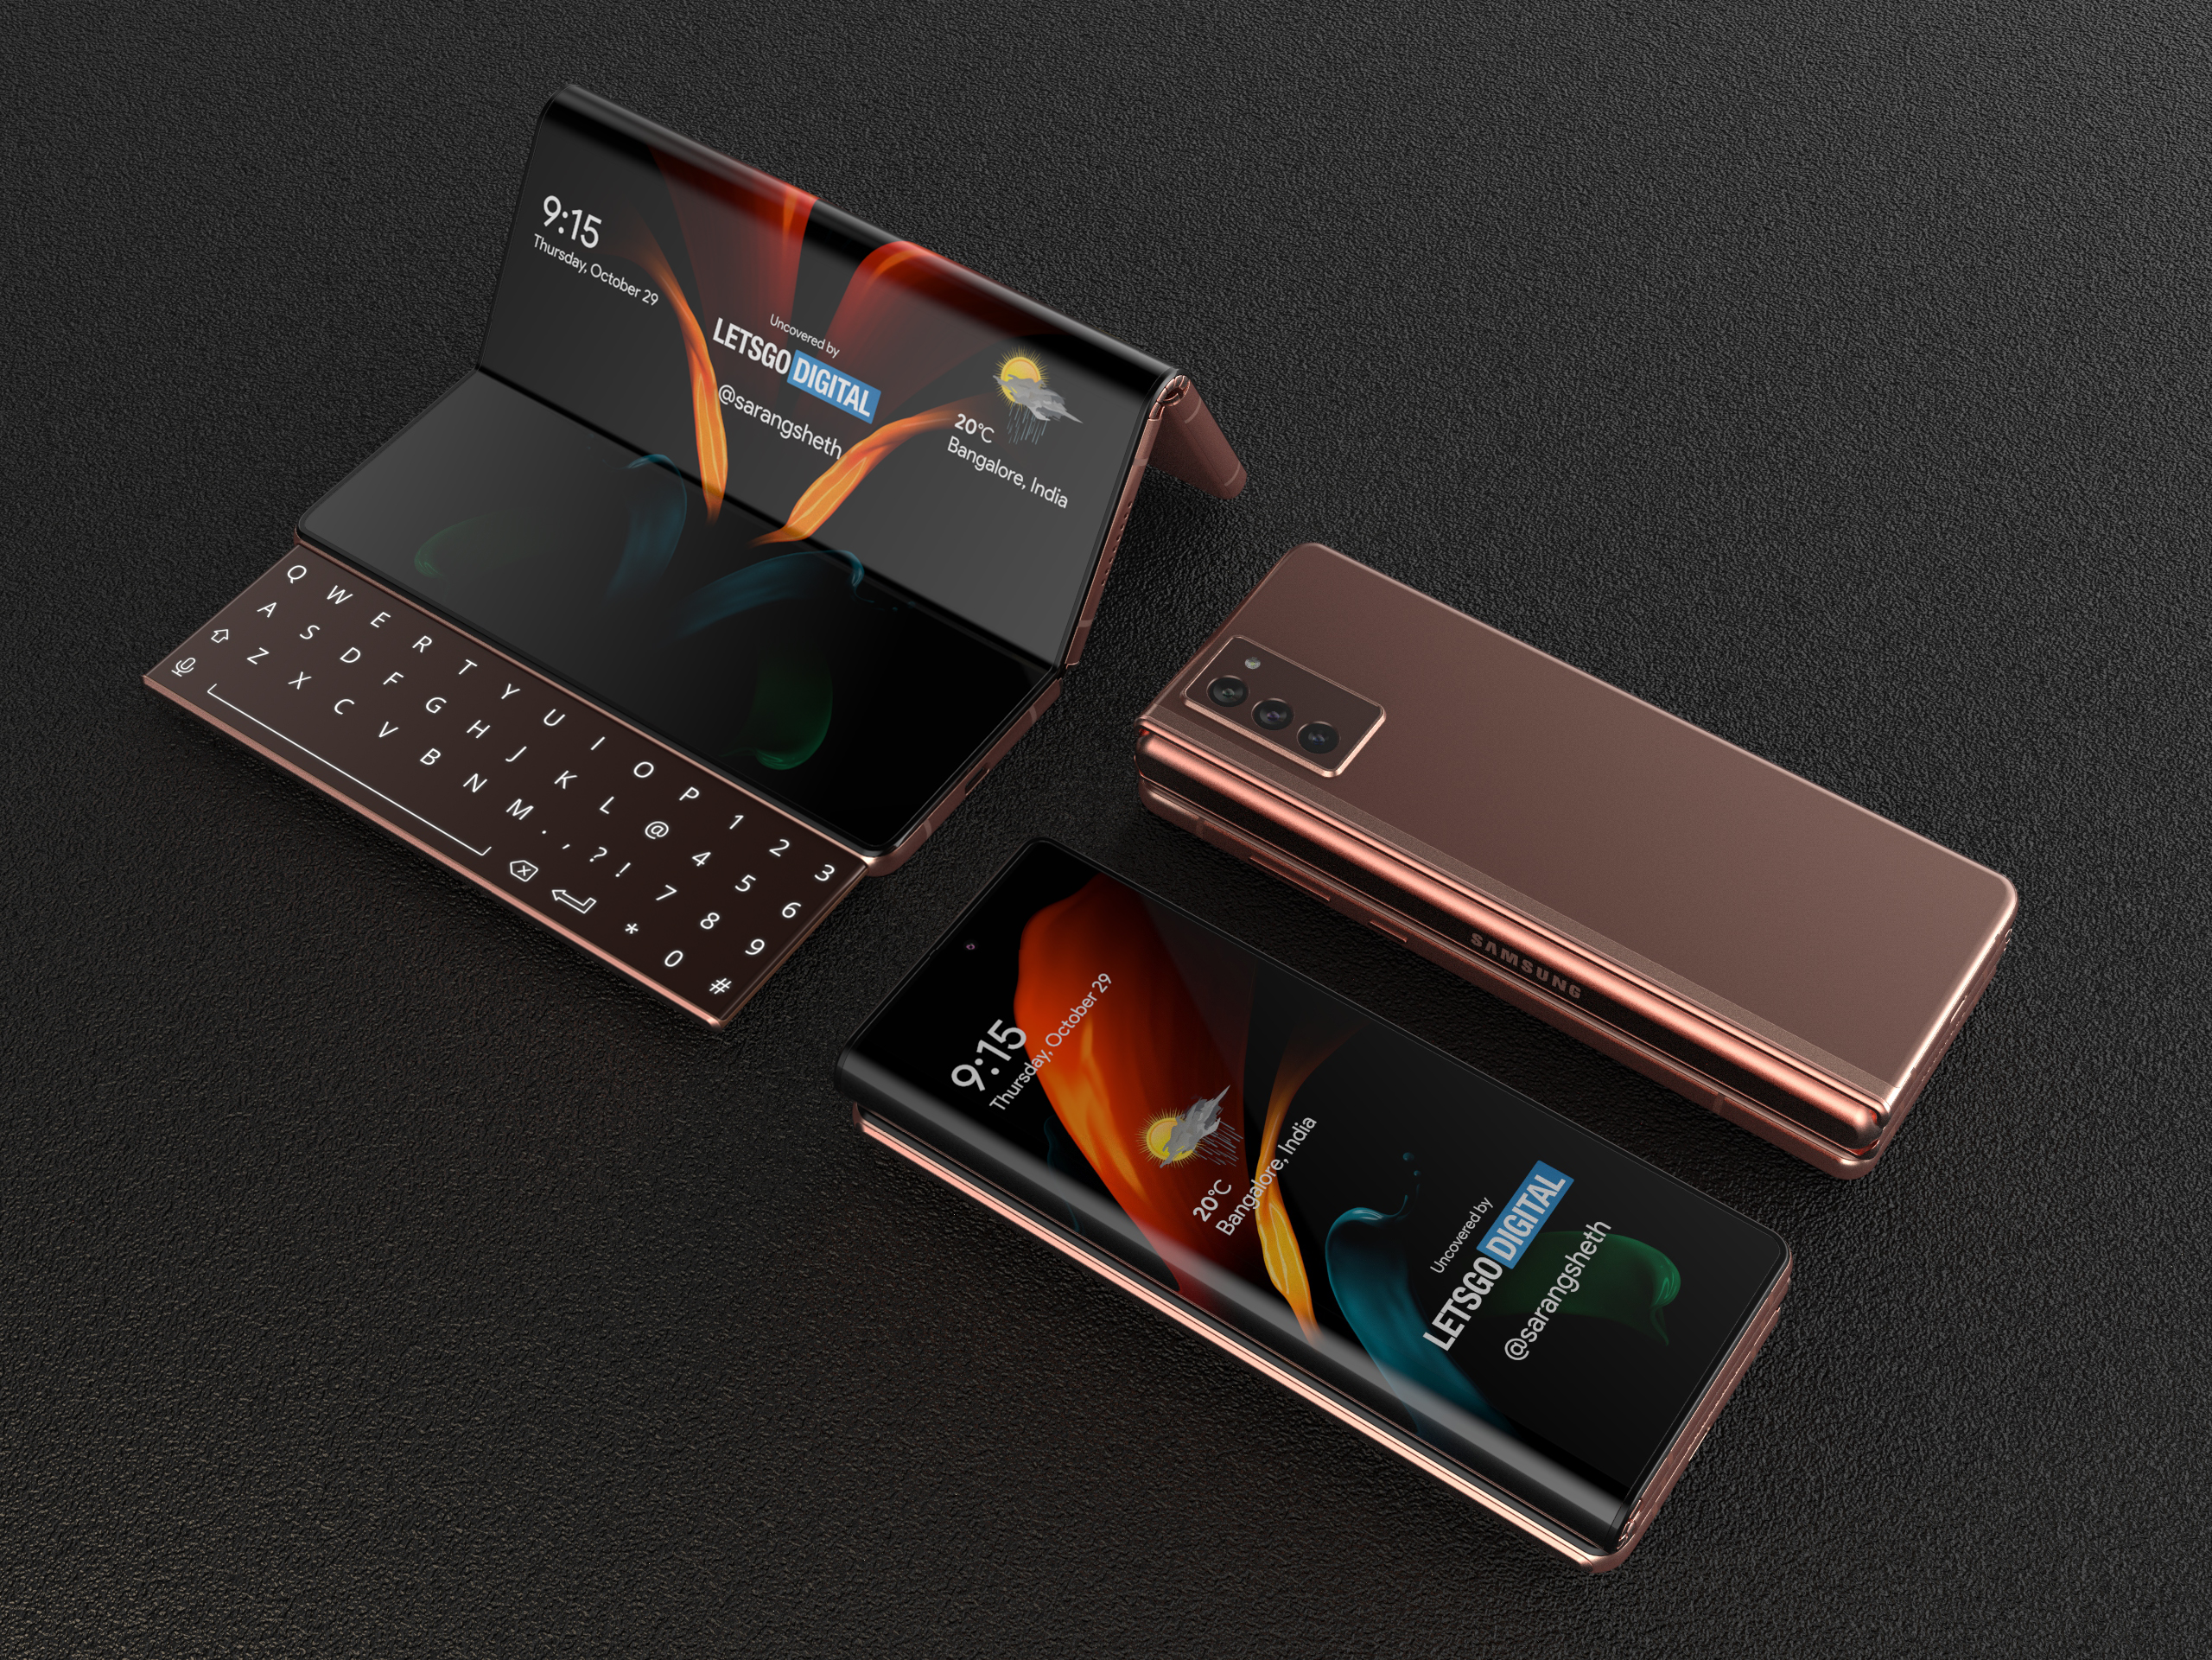 schotel kan zijn Terugspoelen Samsung Galaxy Z Fold smartphone met sliding keyboard | LetsGoDigital